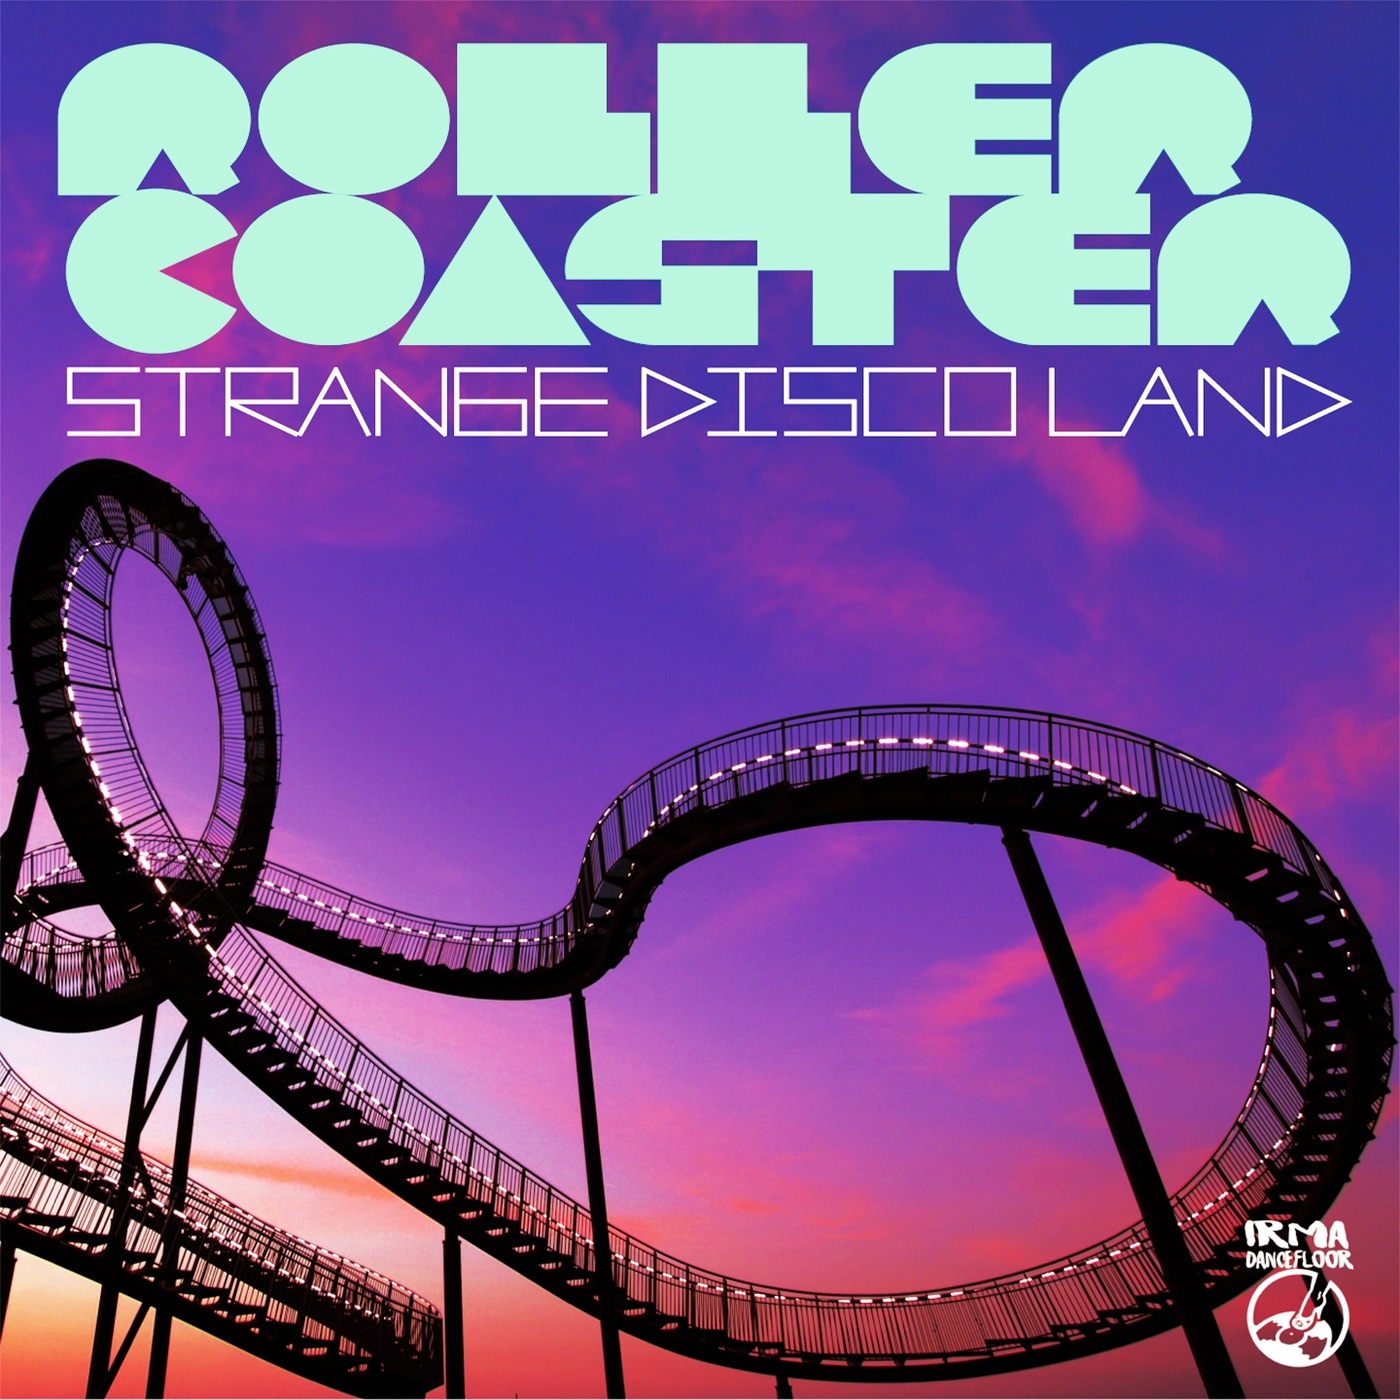 Roller Coaster - Strange Disco Land / Irma Dancefloor